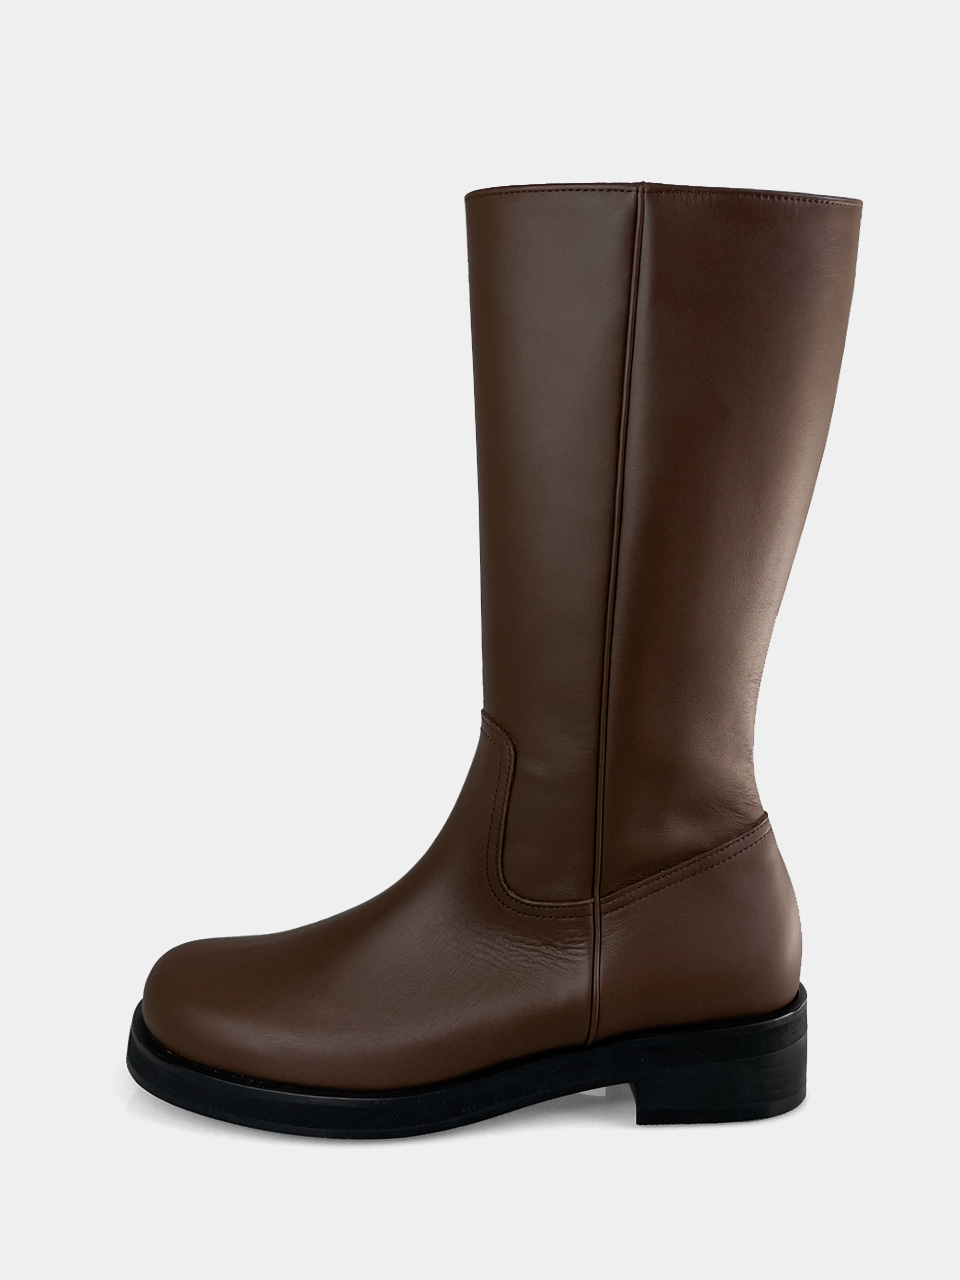 [Out of stock] Mrc093 Diagonal Zipper Long Boots (Brown)